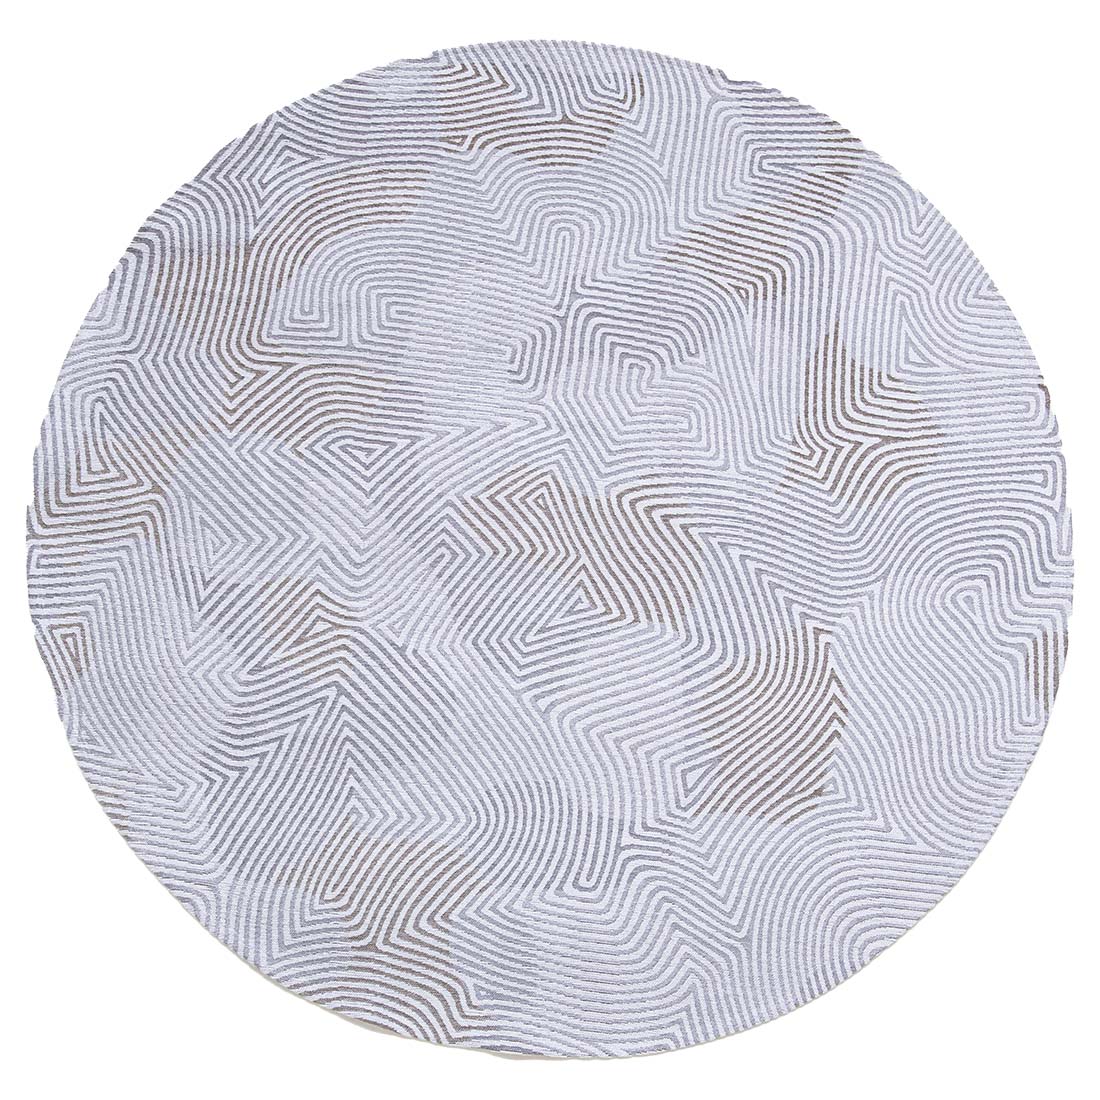 cream flatweave circle rug with organic, textured pattern
